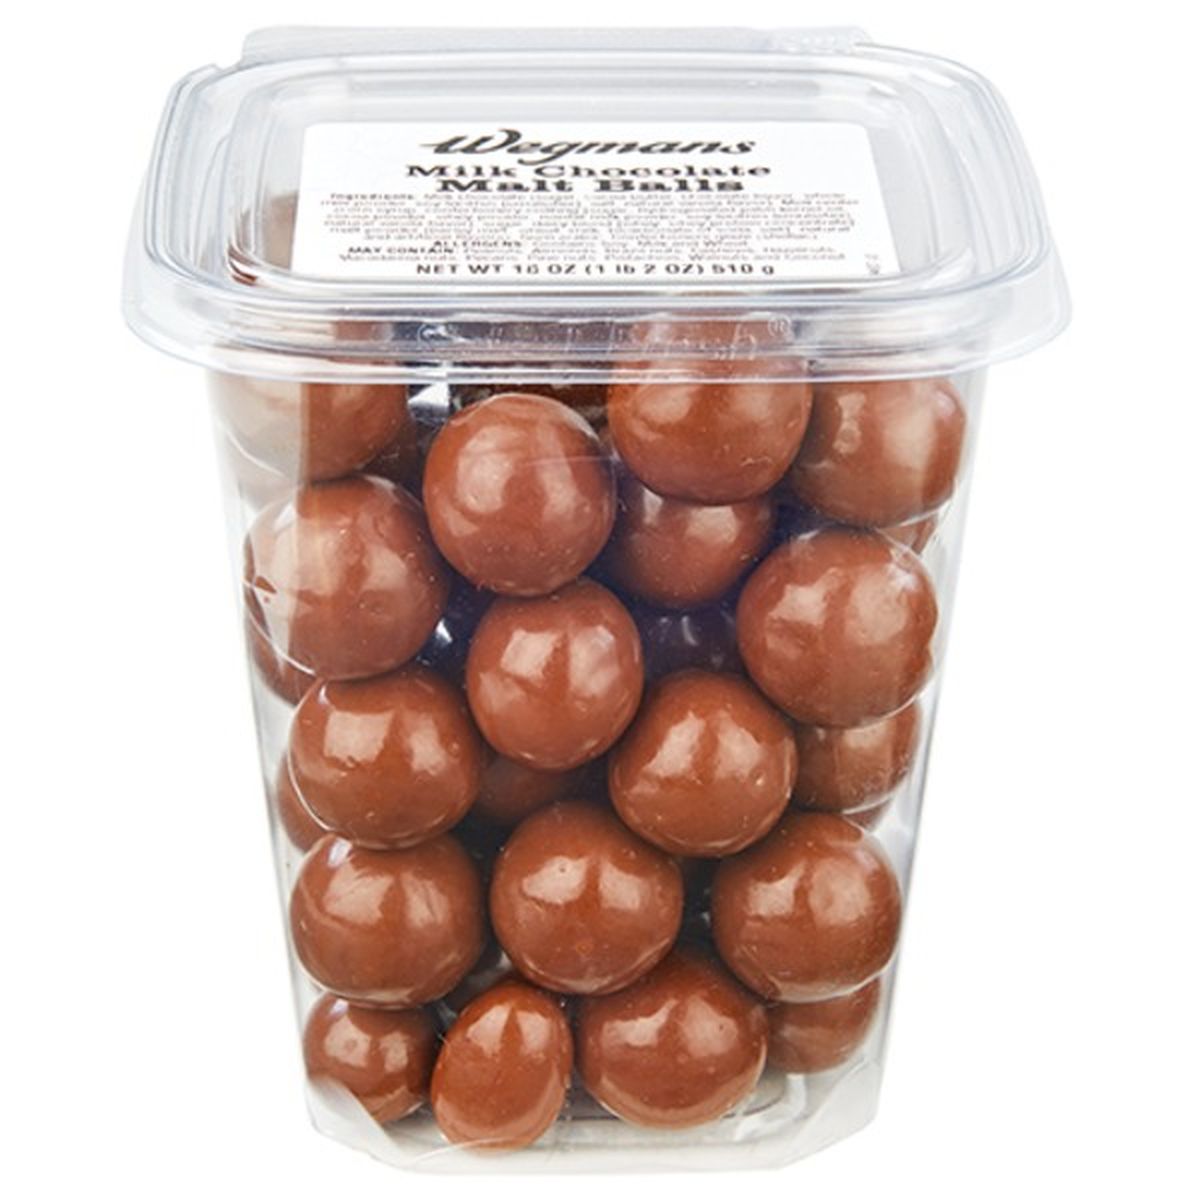 Calories in Wegmans Milk Chocolate Malt Balls